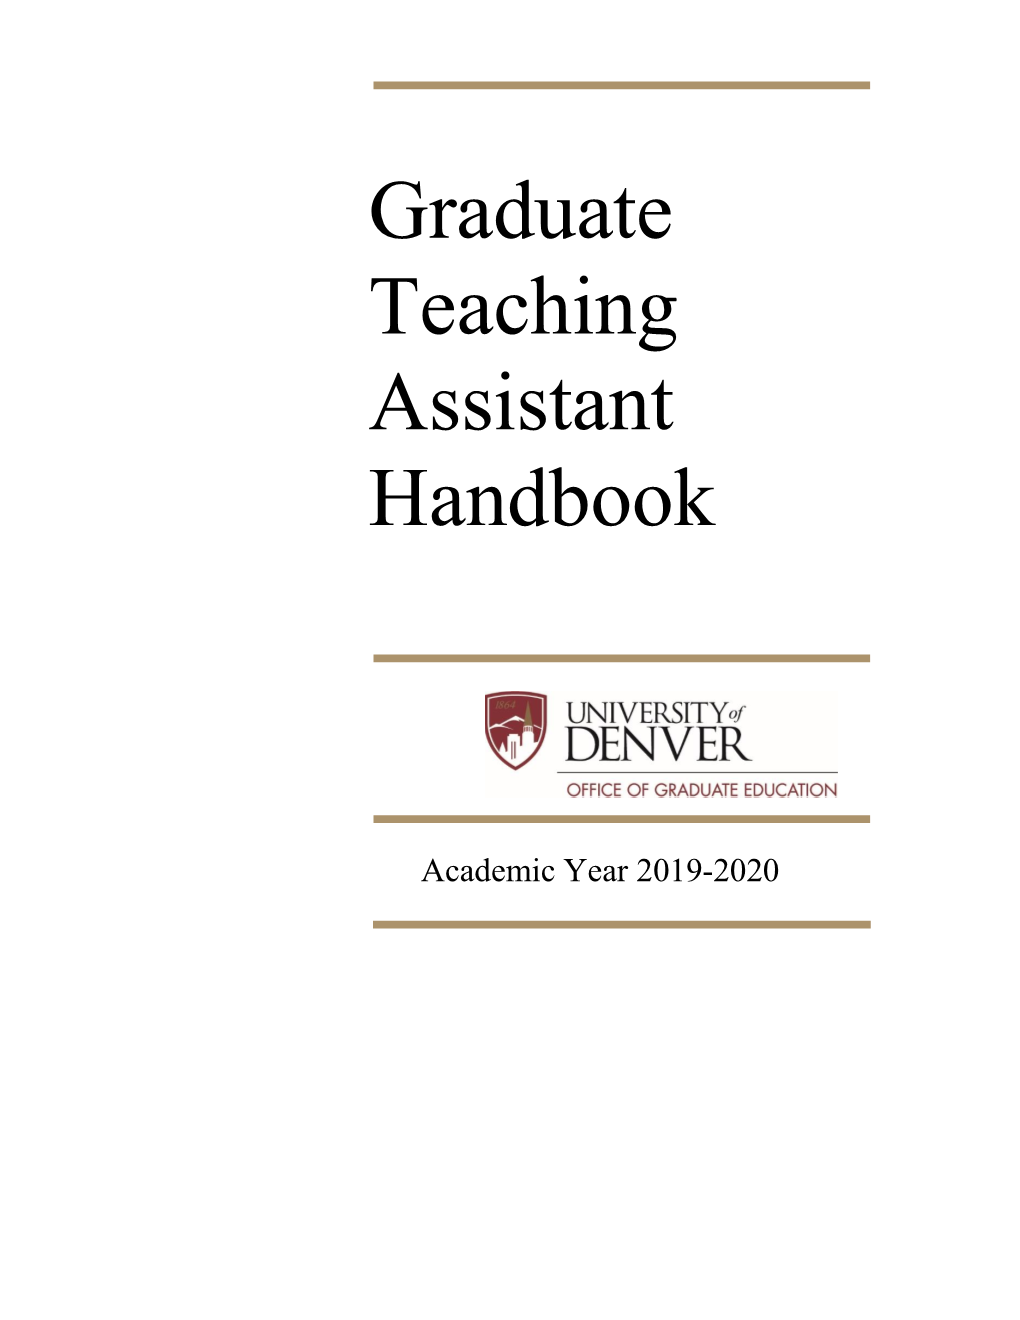 Graduate Teaching Assistant Handbook